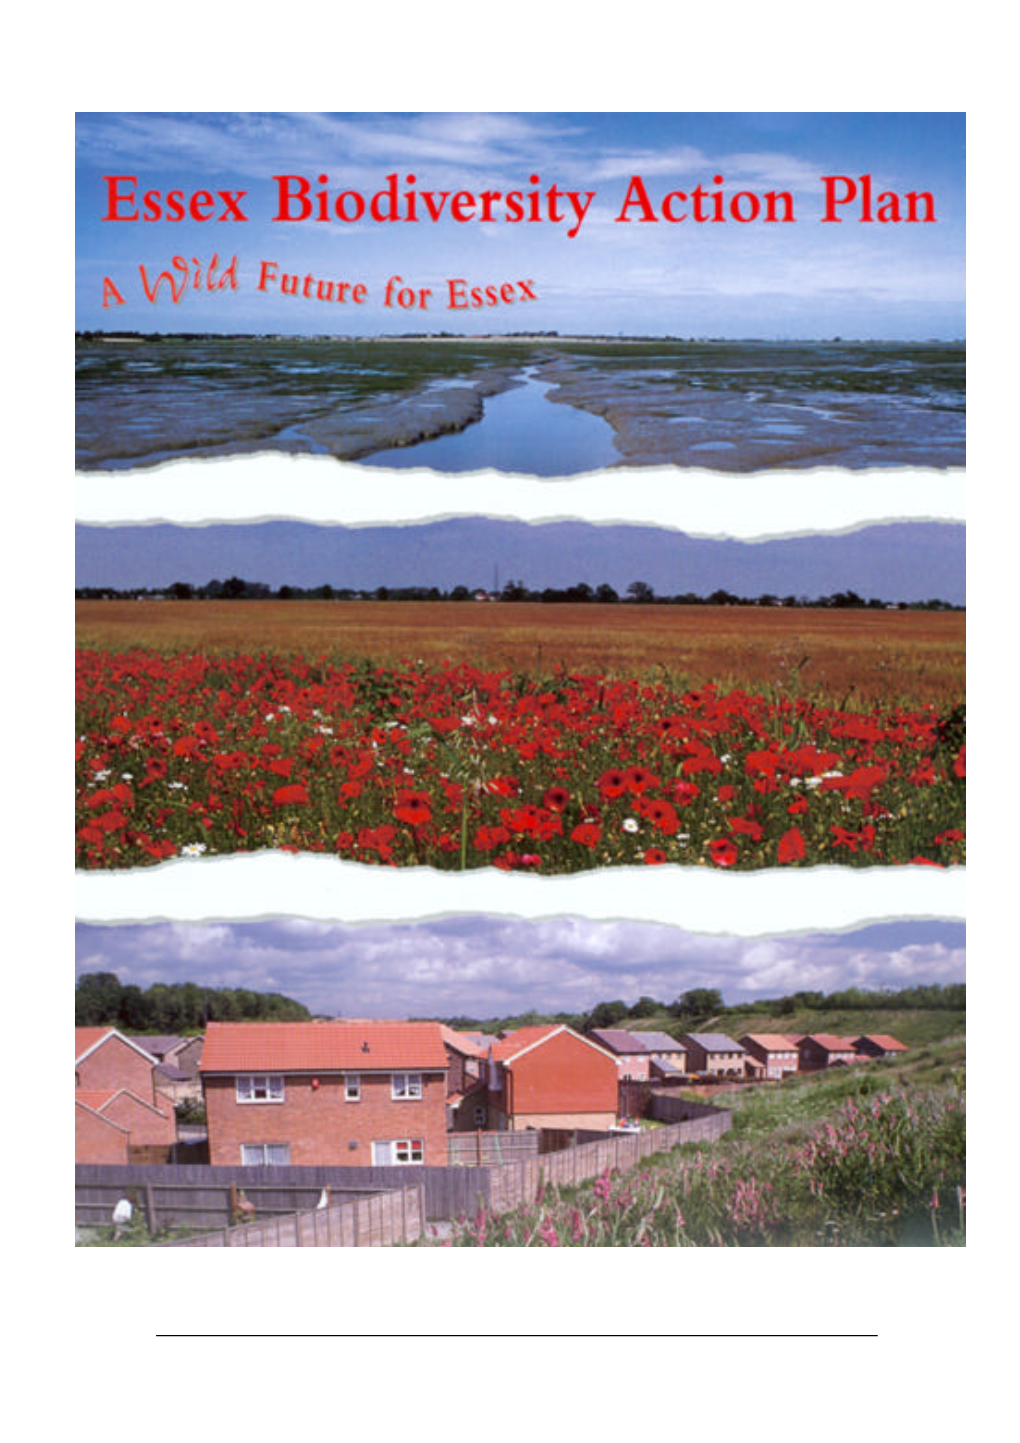 The Essex Biodiversity Action Plan